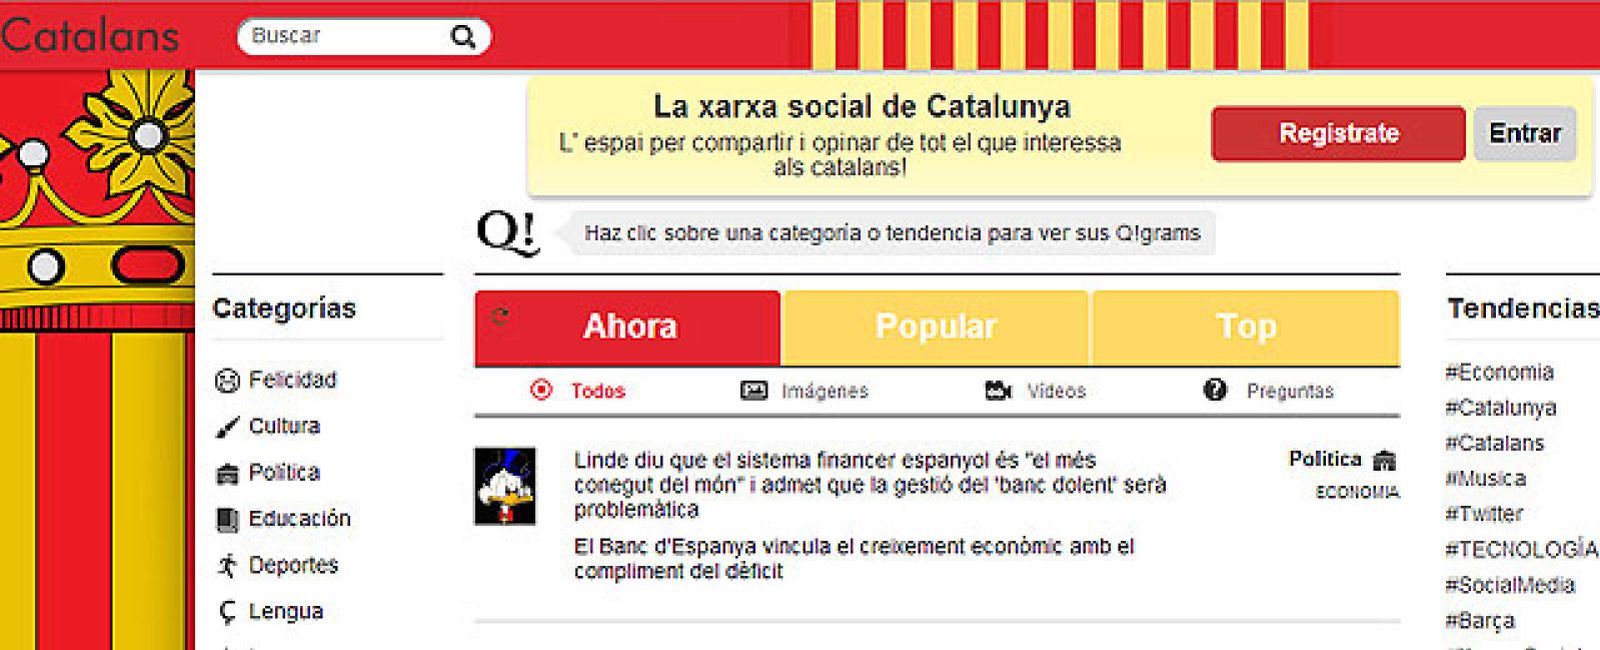 Foto: Nace 'Catalans', la primera red social para catalanes